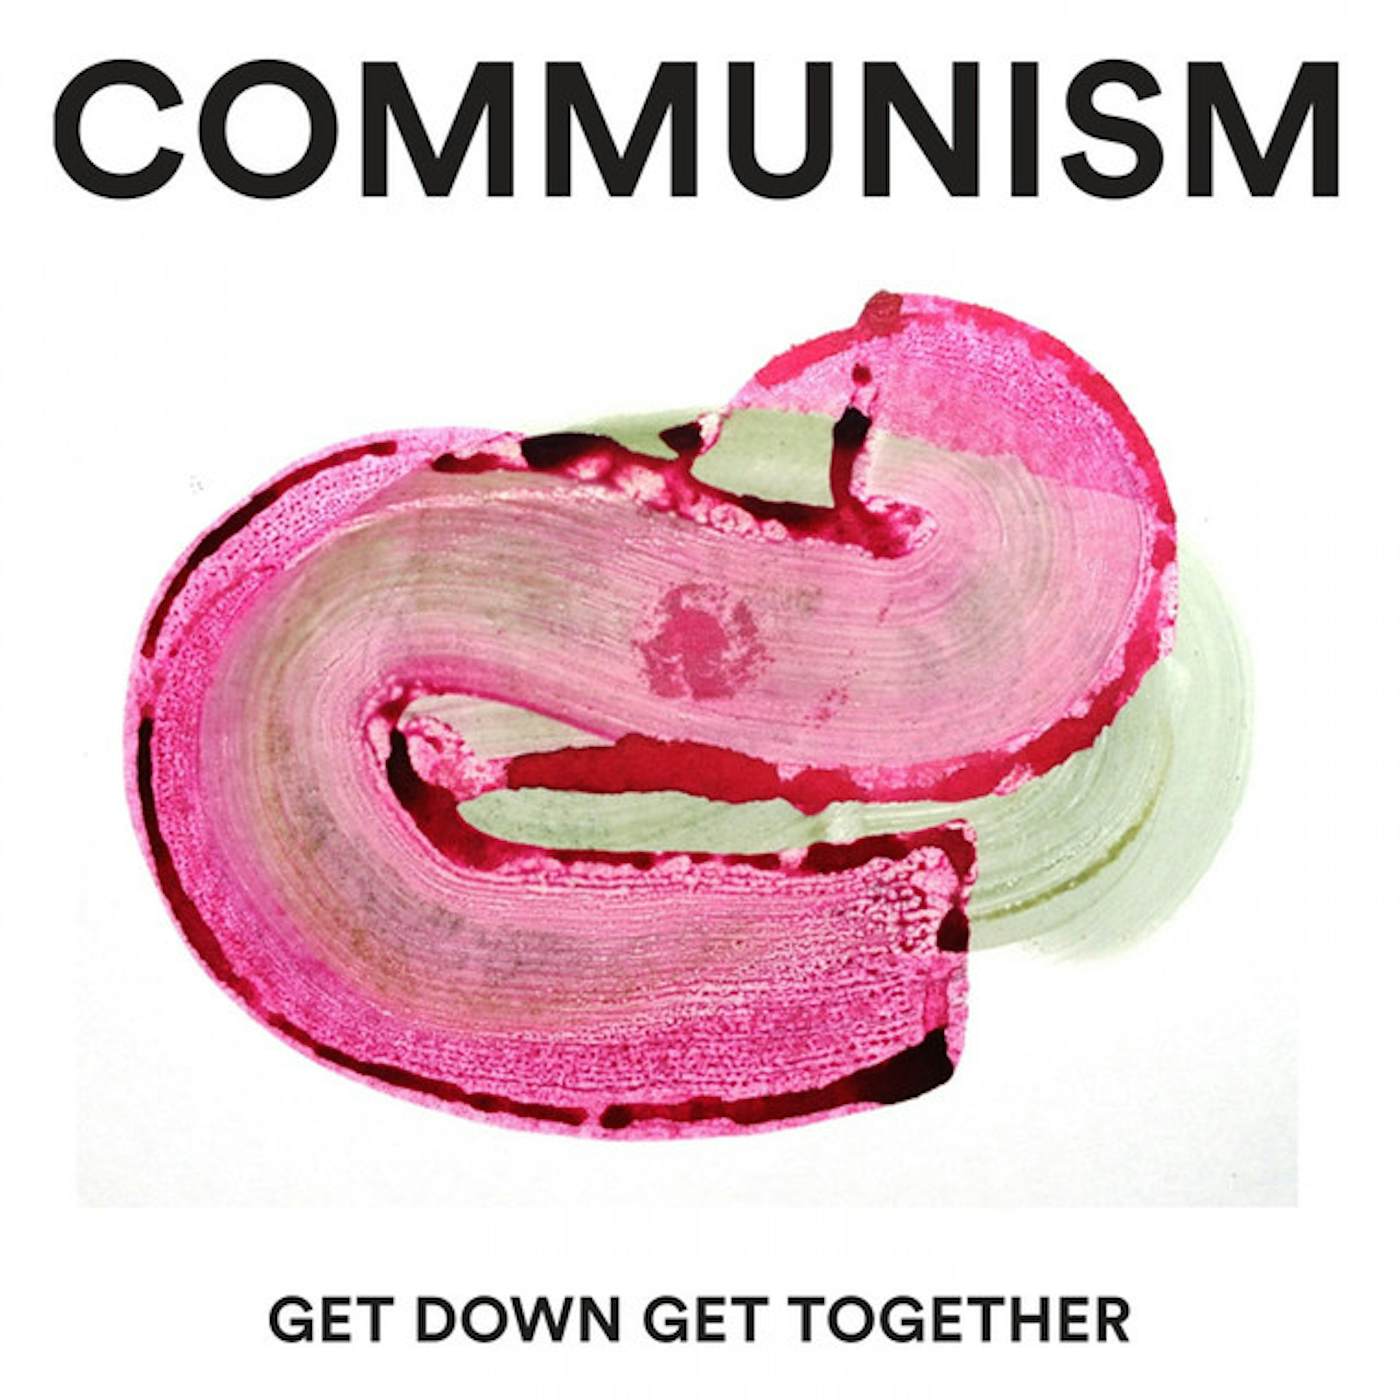 Communism Get Down Get Together Vinyl Record